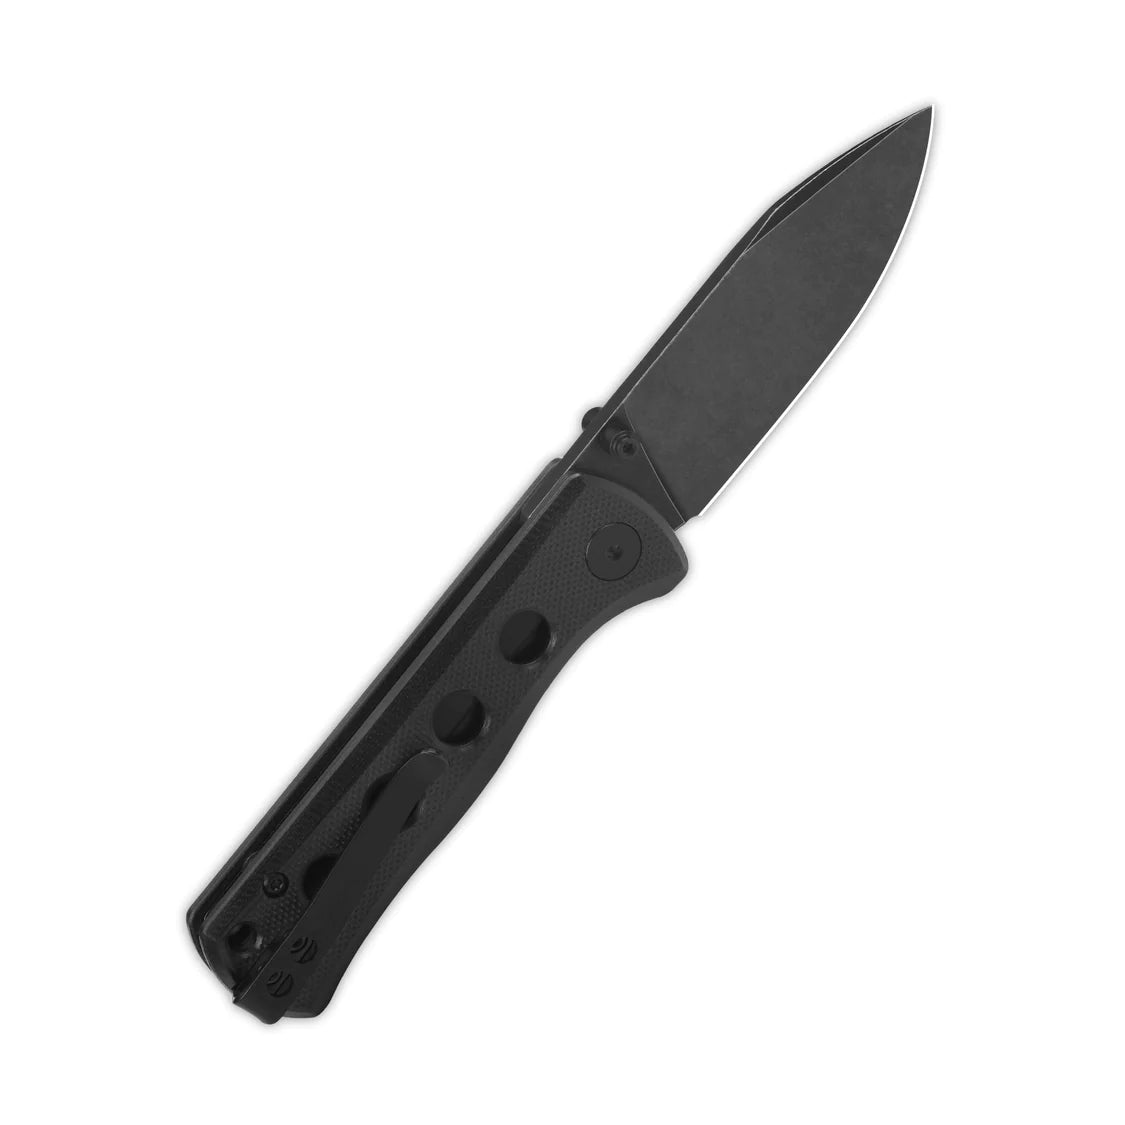 Canary Folder - Black G10, Black stonewashed-QSP-OnlyKnives